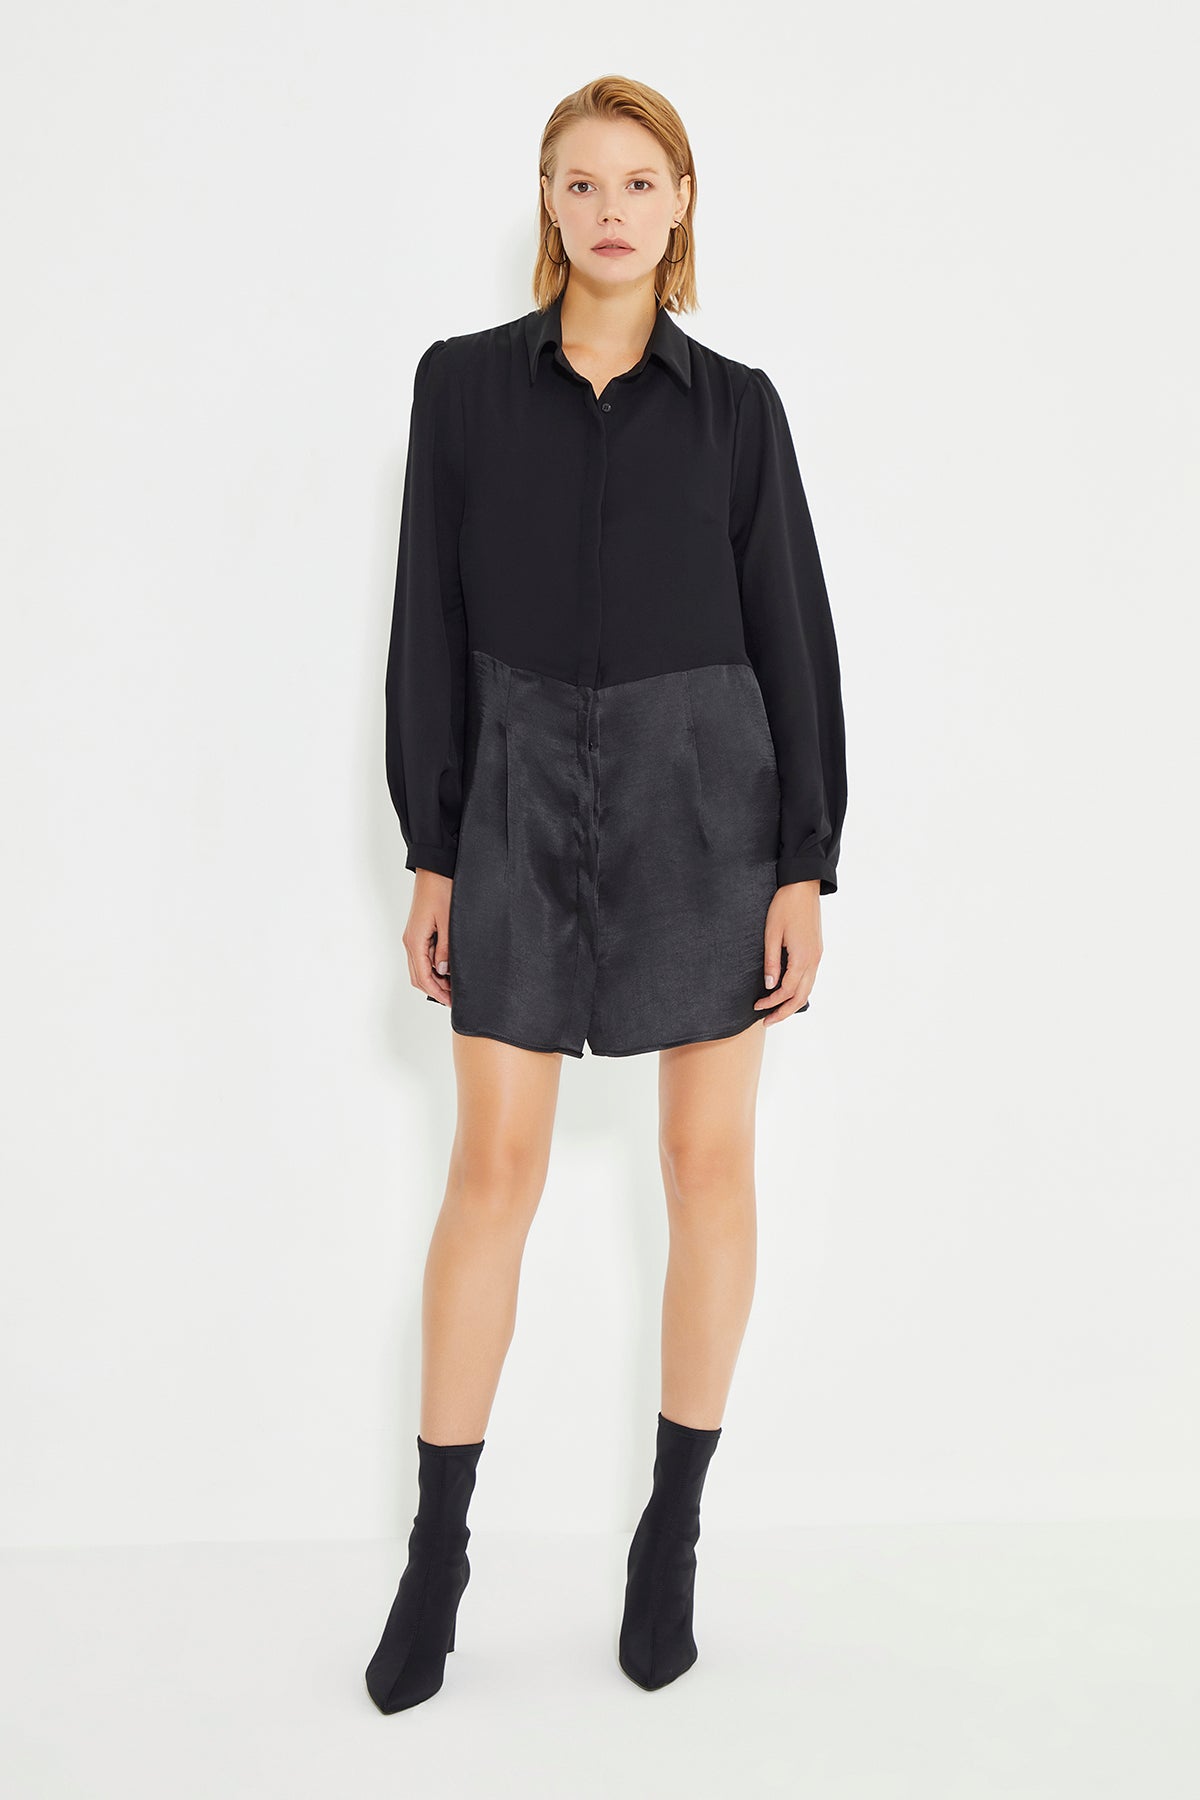 Black Long Sleeve Shirt Dress With Satin Skirt and Chiffon Top